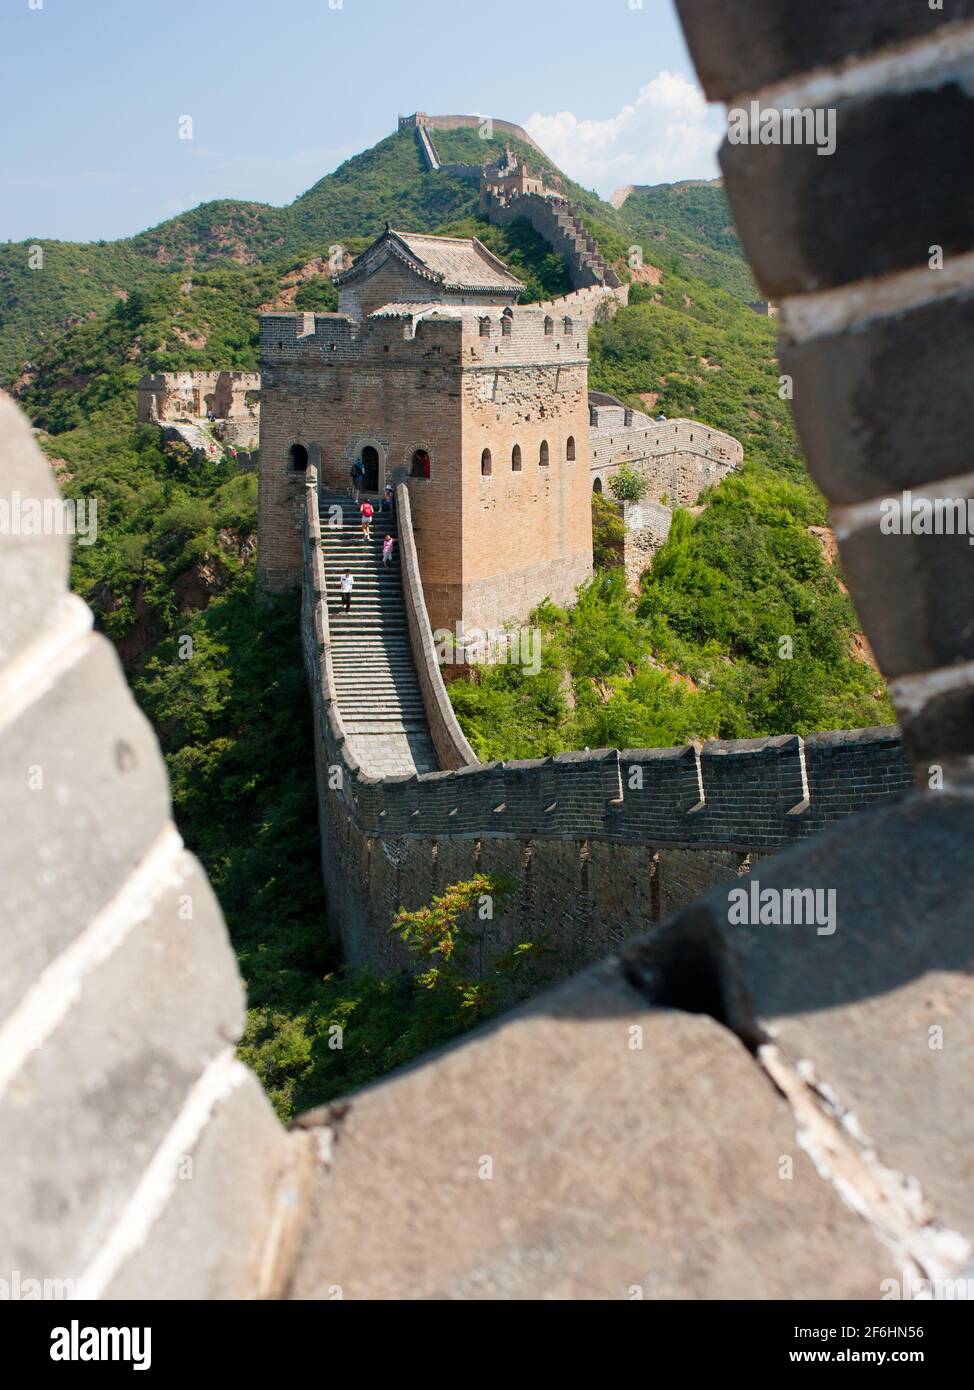 Great Wall - China Stock Photo